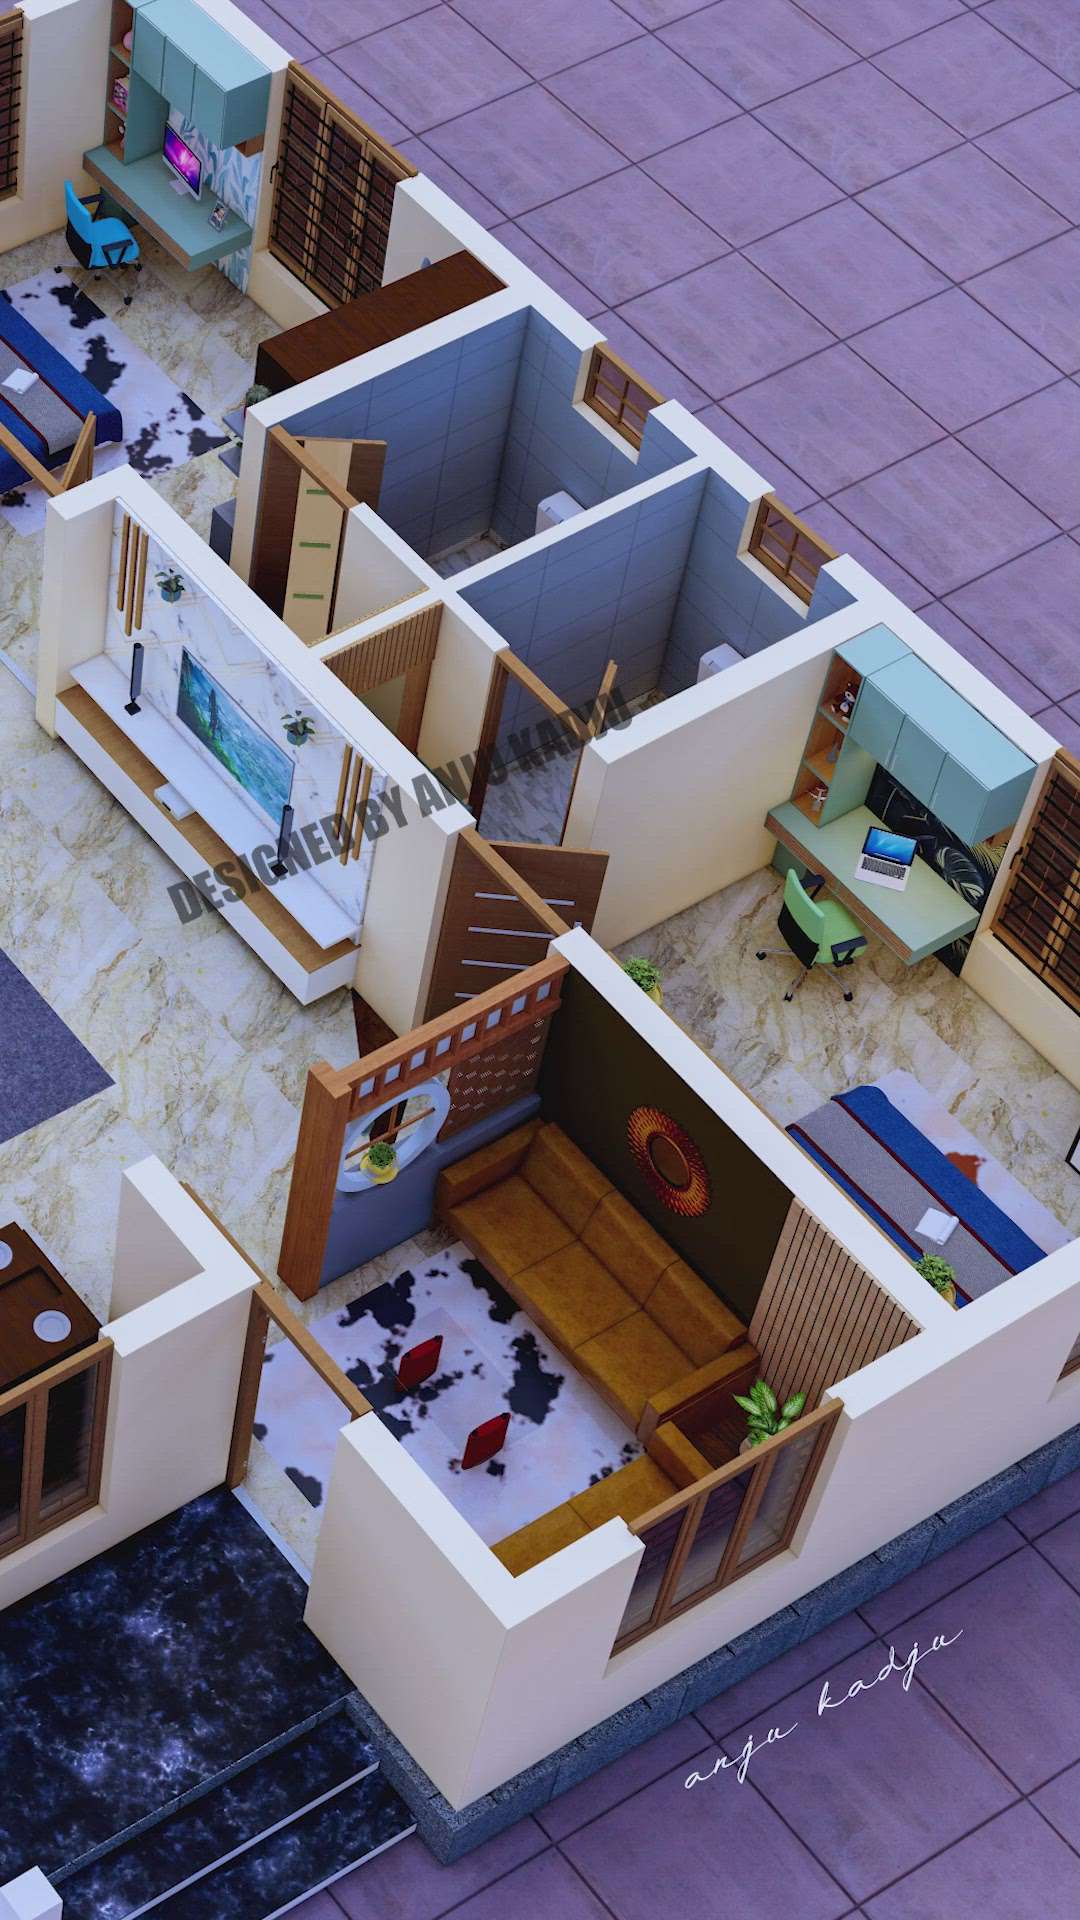 3d floor plan / 3d plan
designed by anju kadju
drop your message for more details
#3Dfloorplans #3DPlans #InteriorDesigner #keralastyle